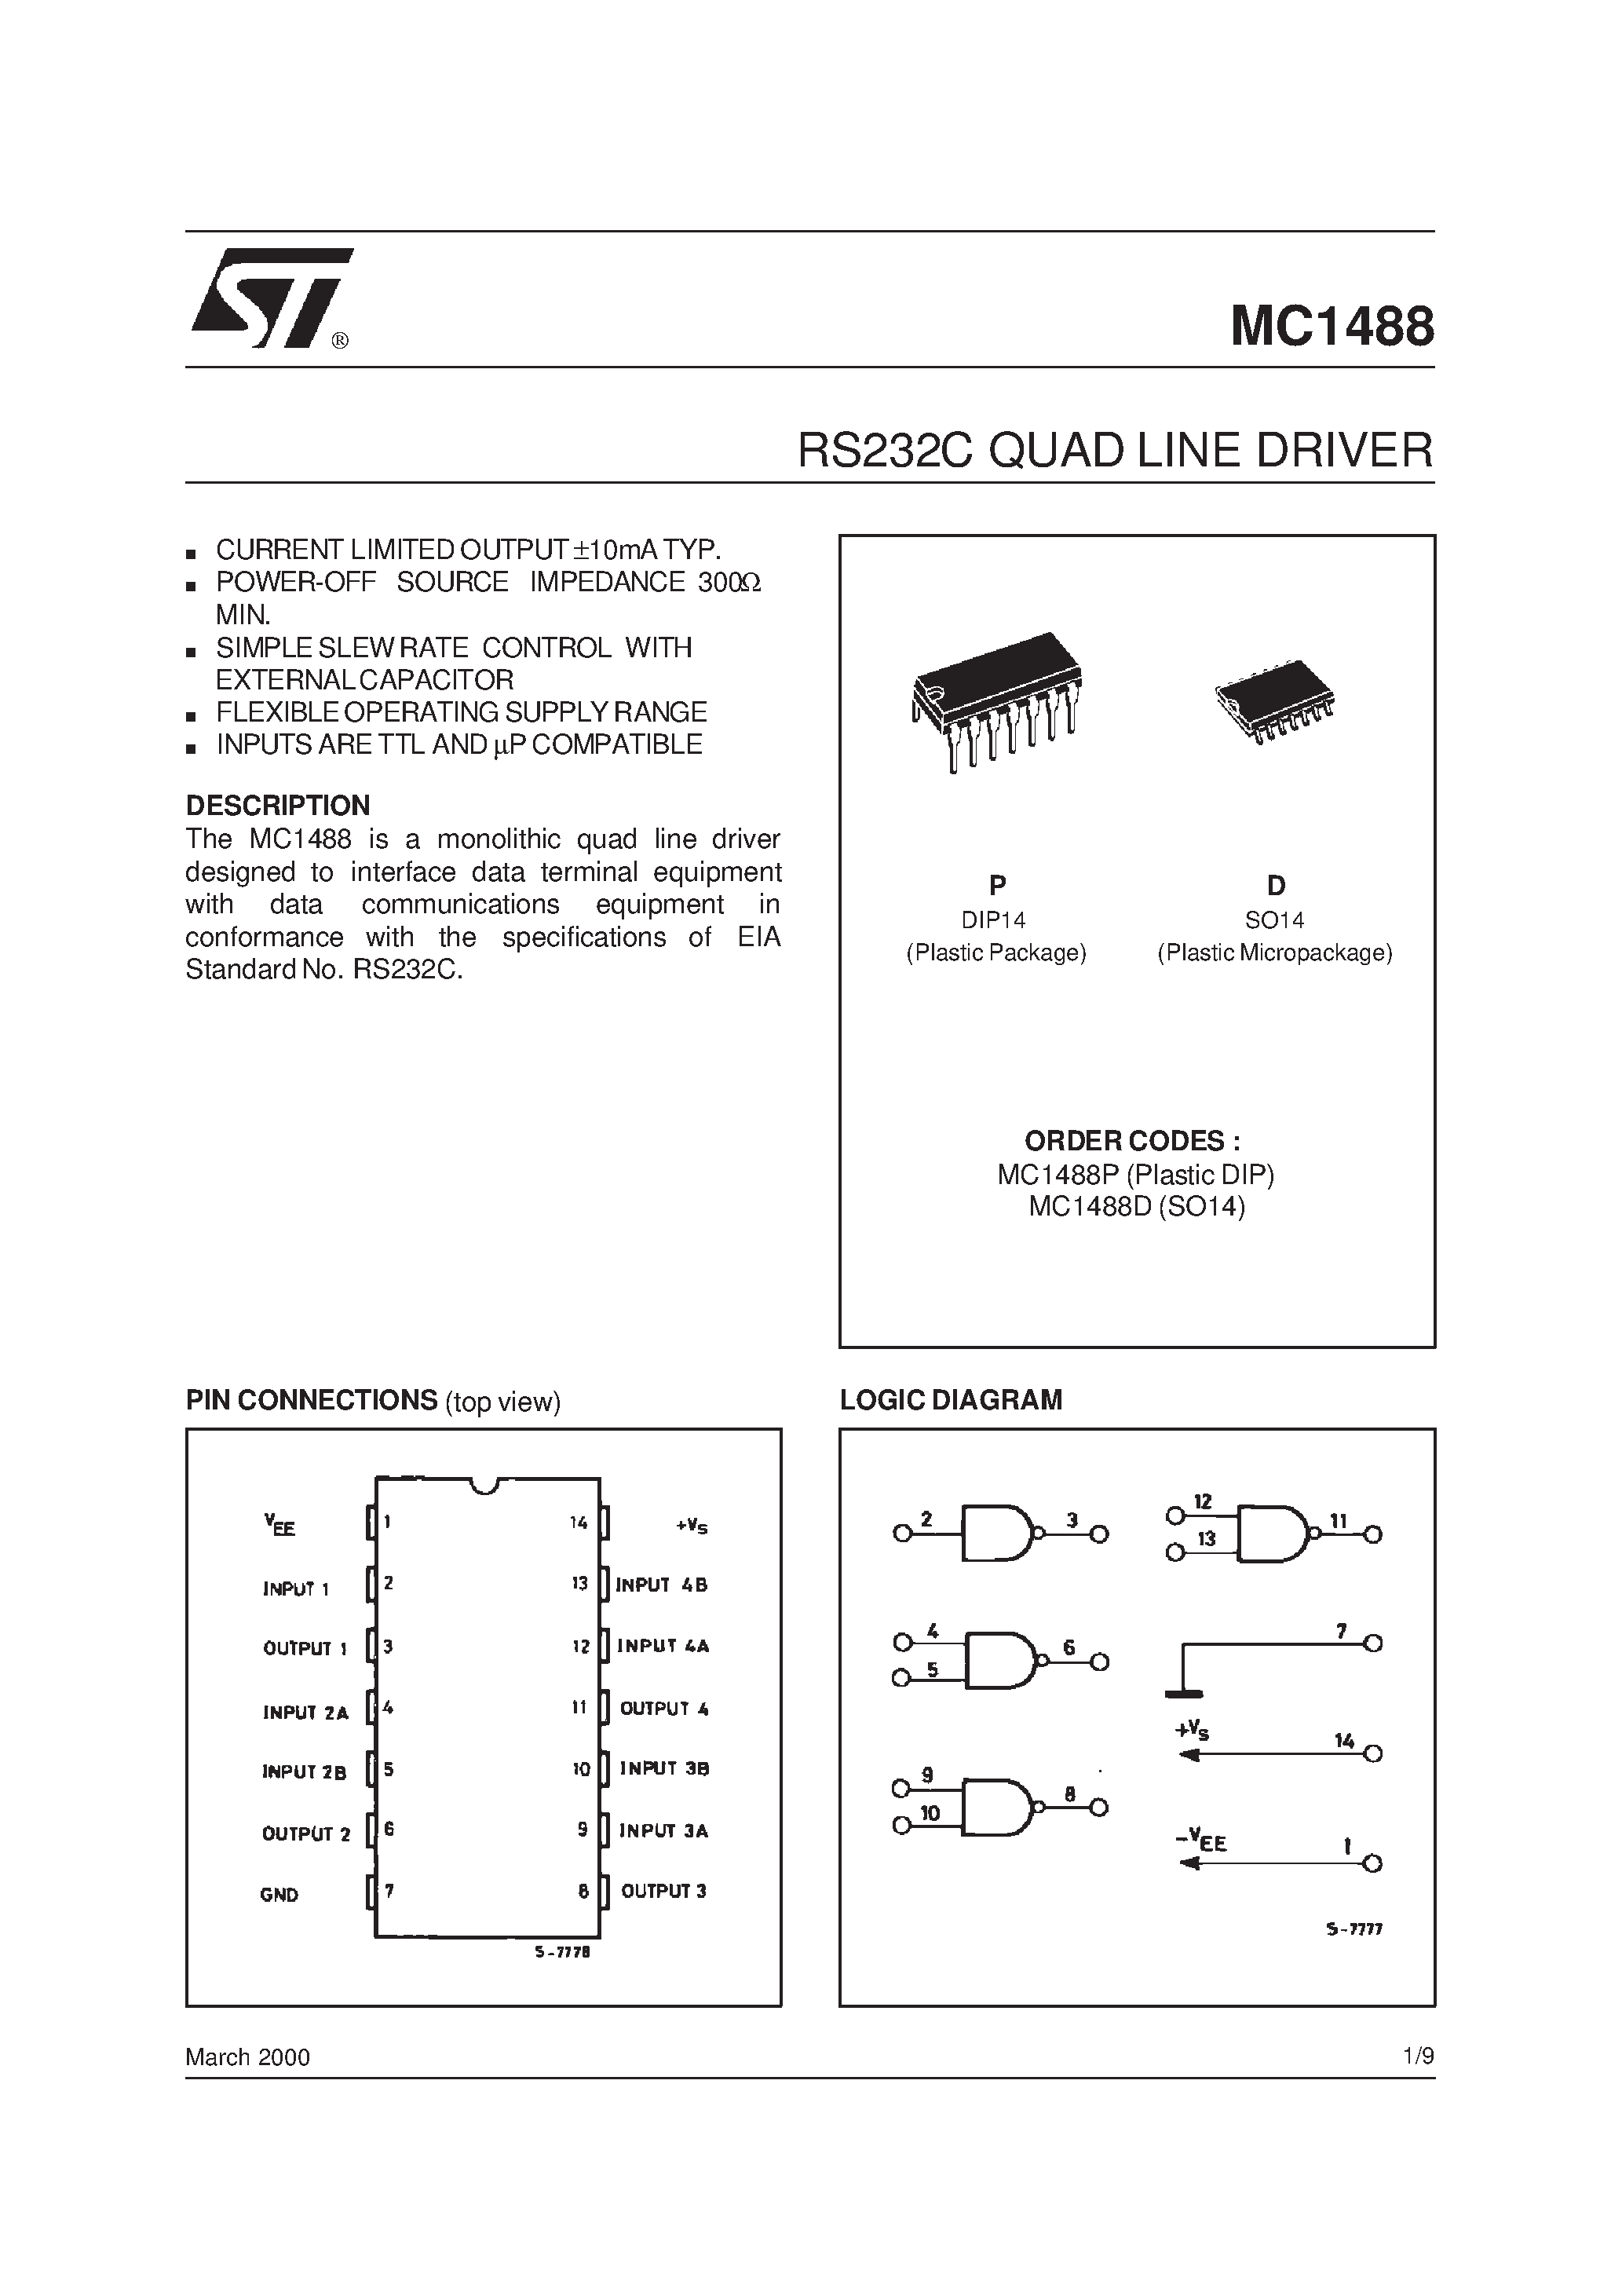 Datasheet MC1488 - RS232C QUAD LINE DRIVER page 1